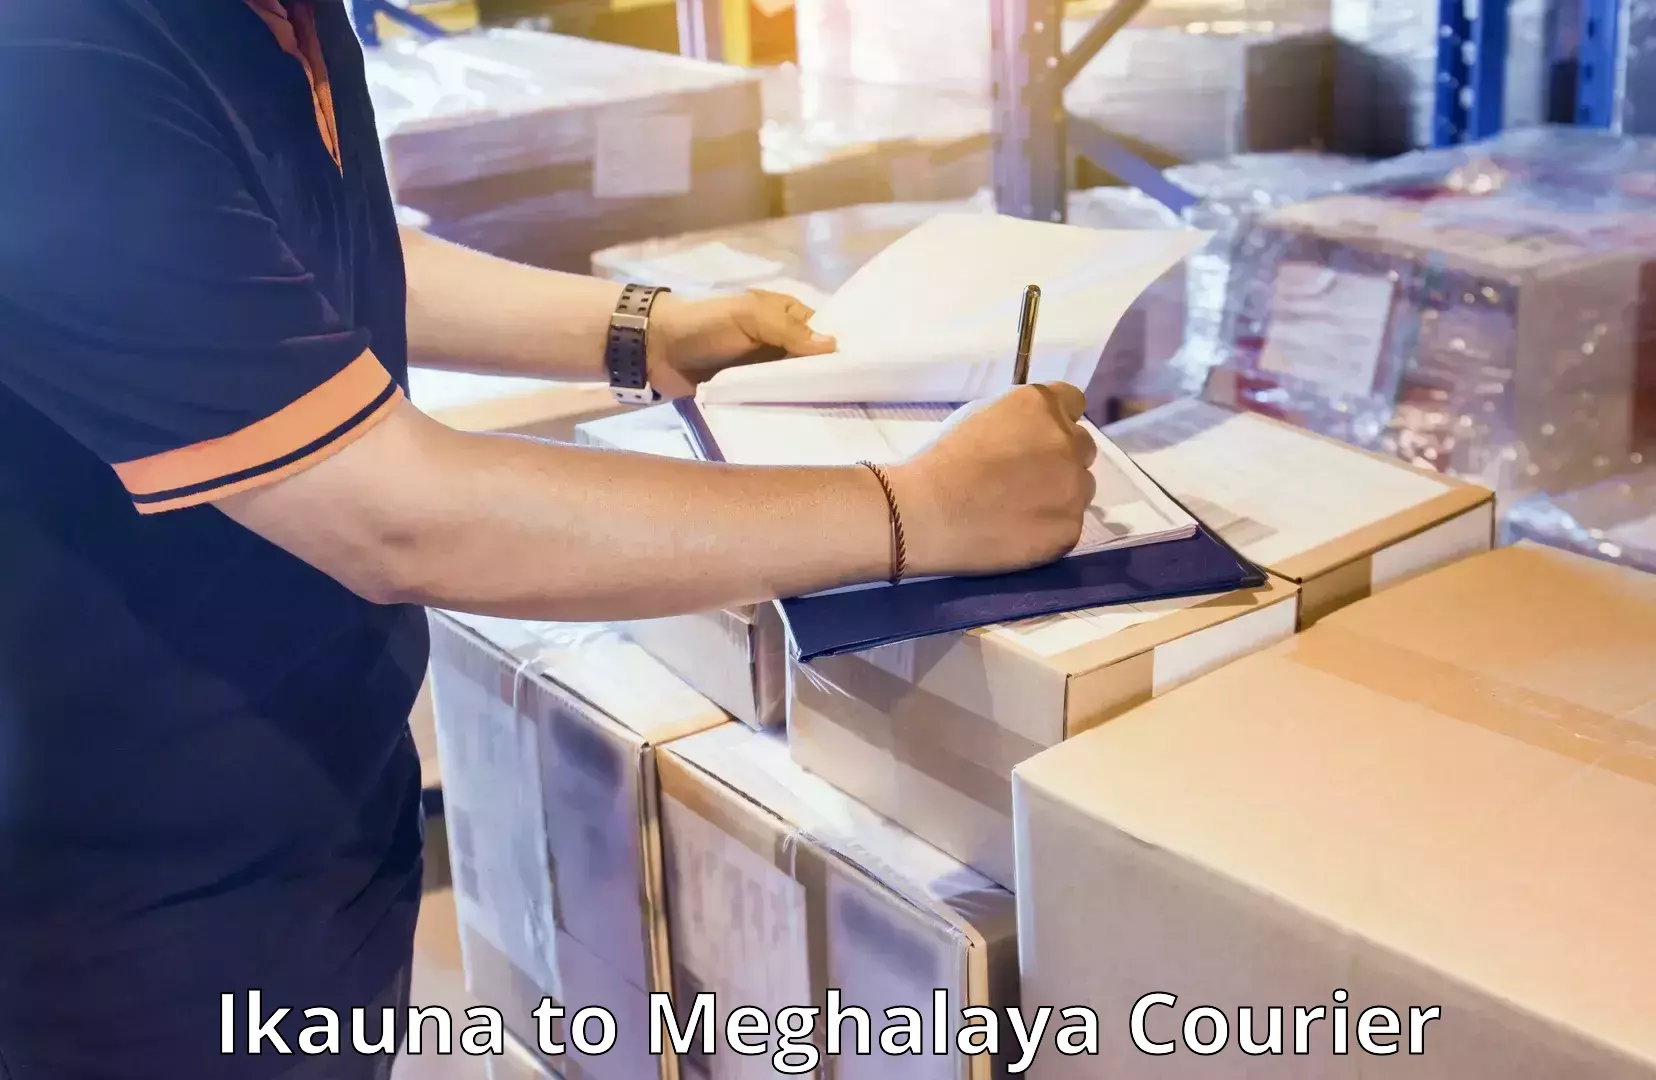 Luggage shipment specialists Ikauna to Meghalaya